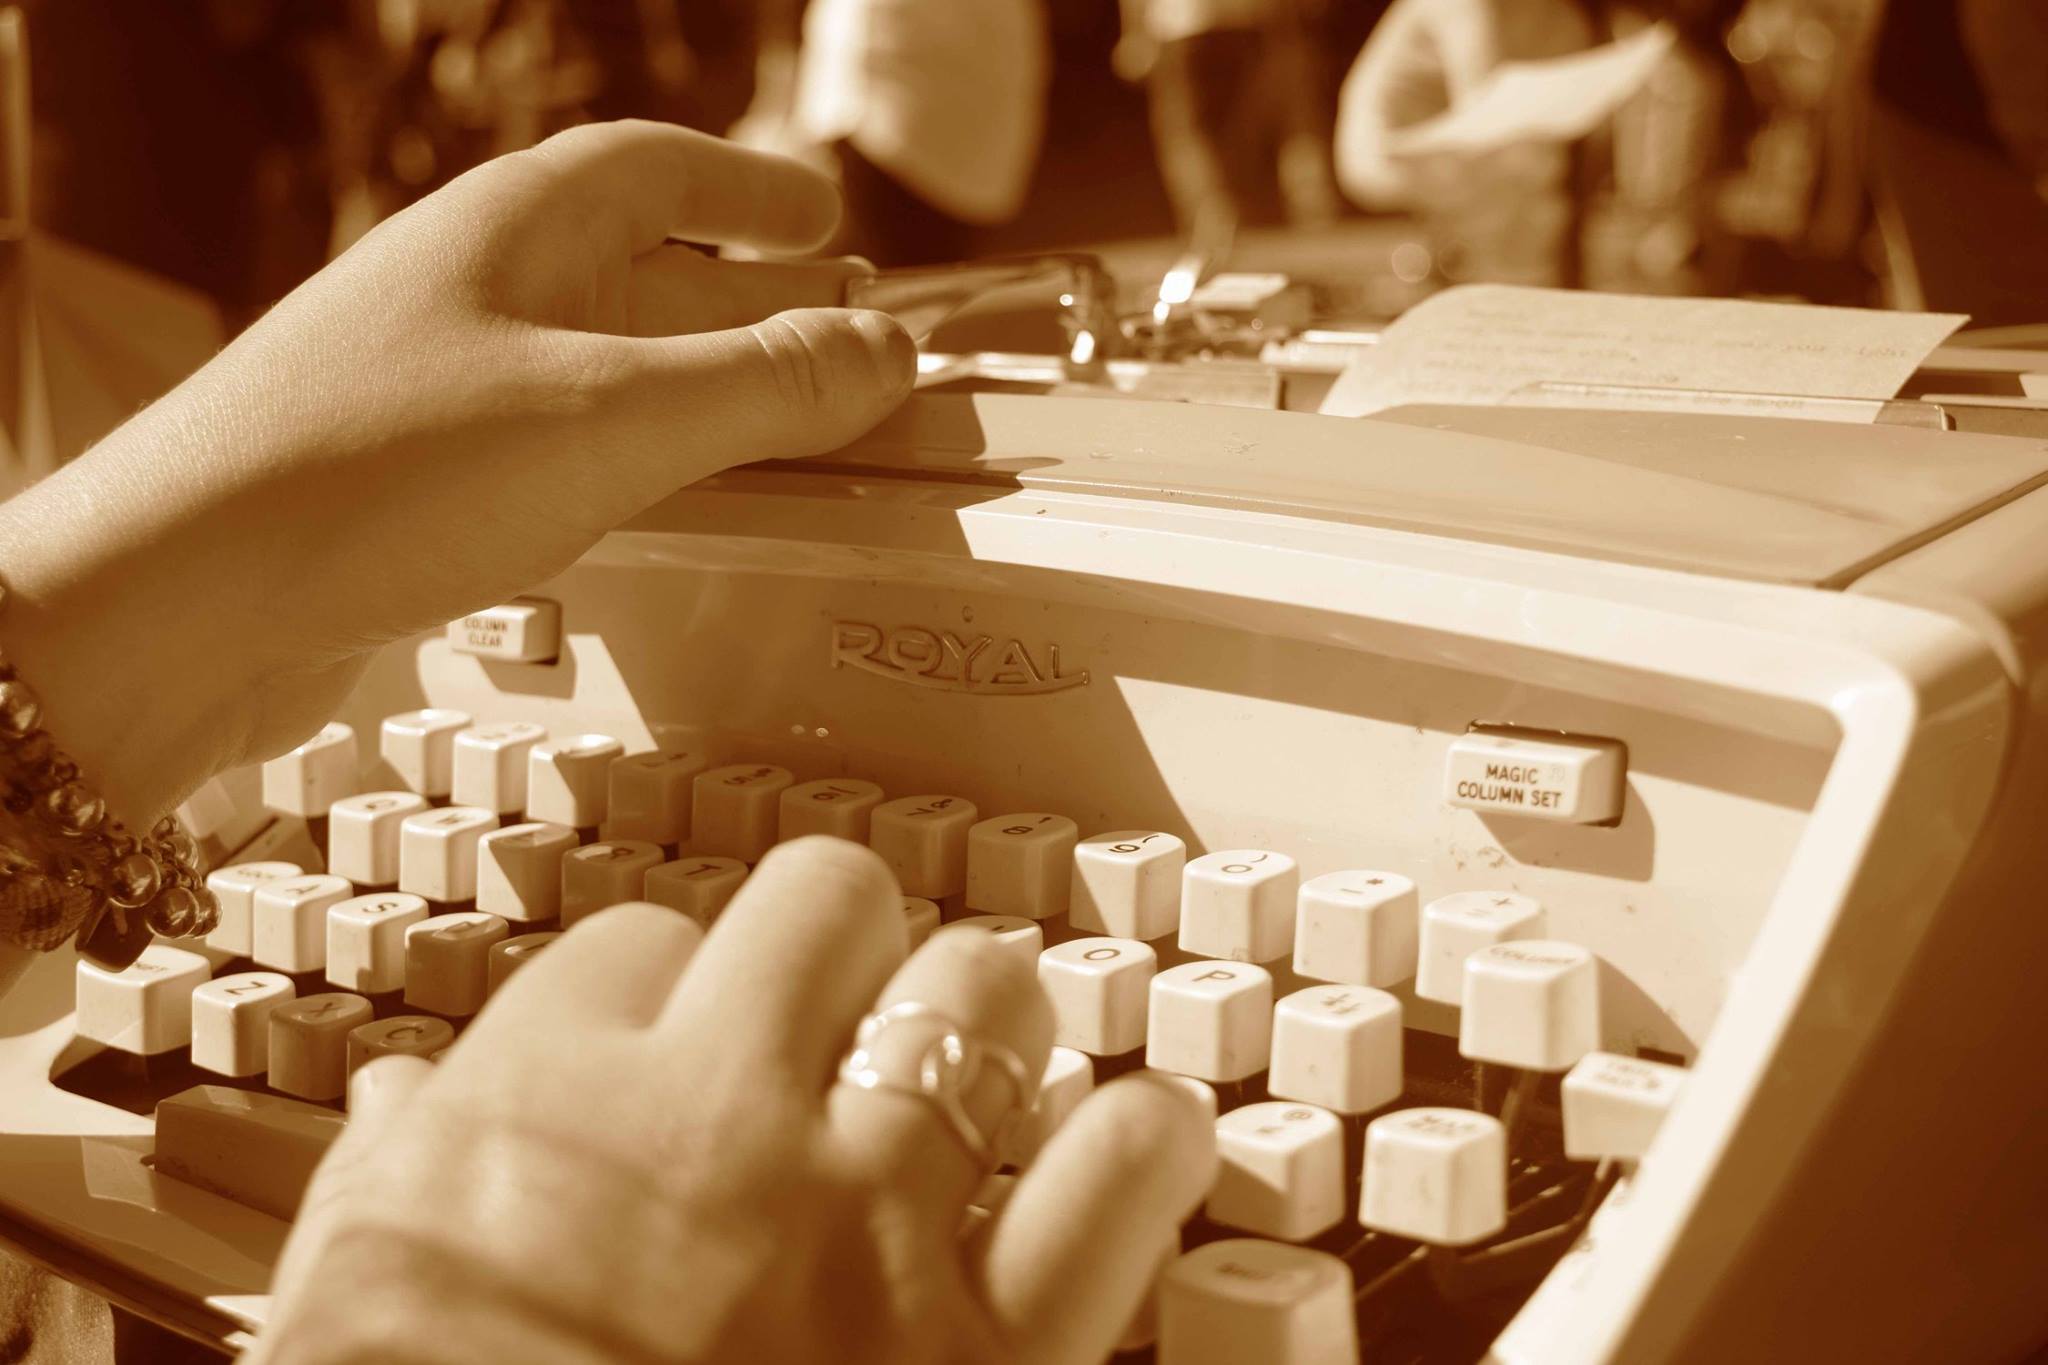 hands using a typewriter